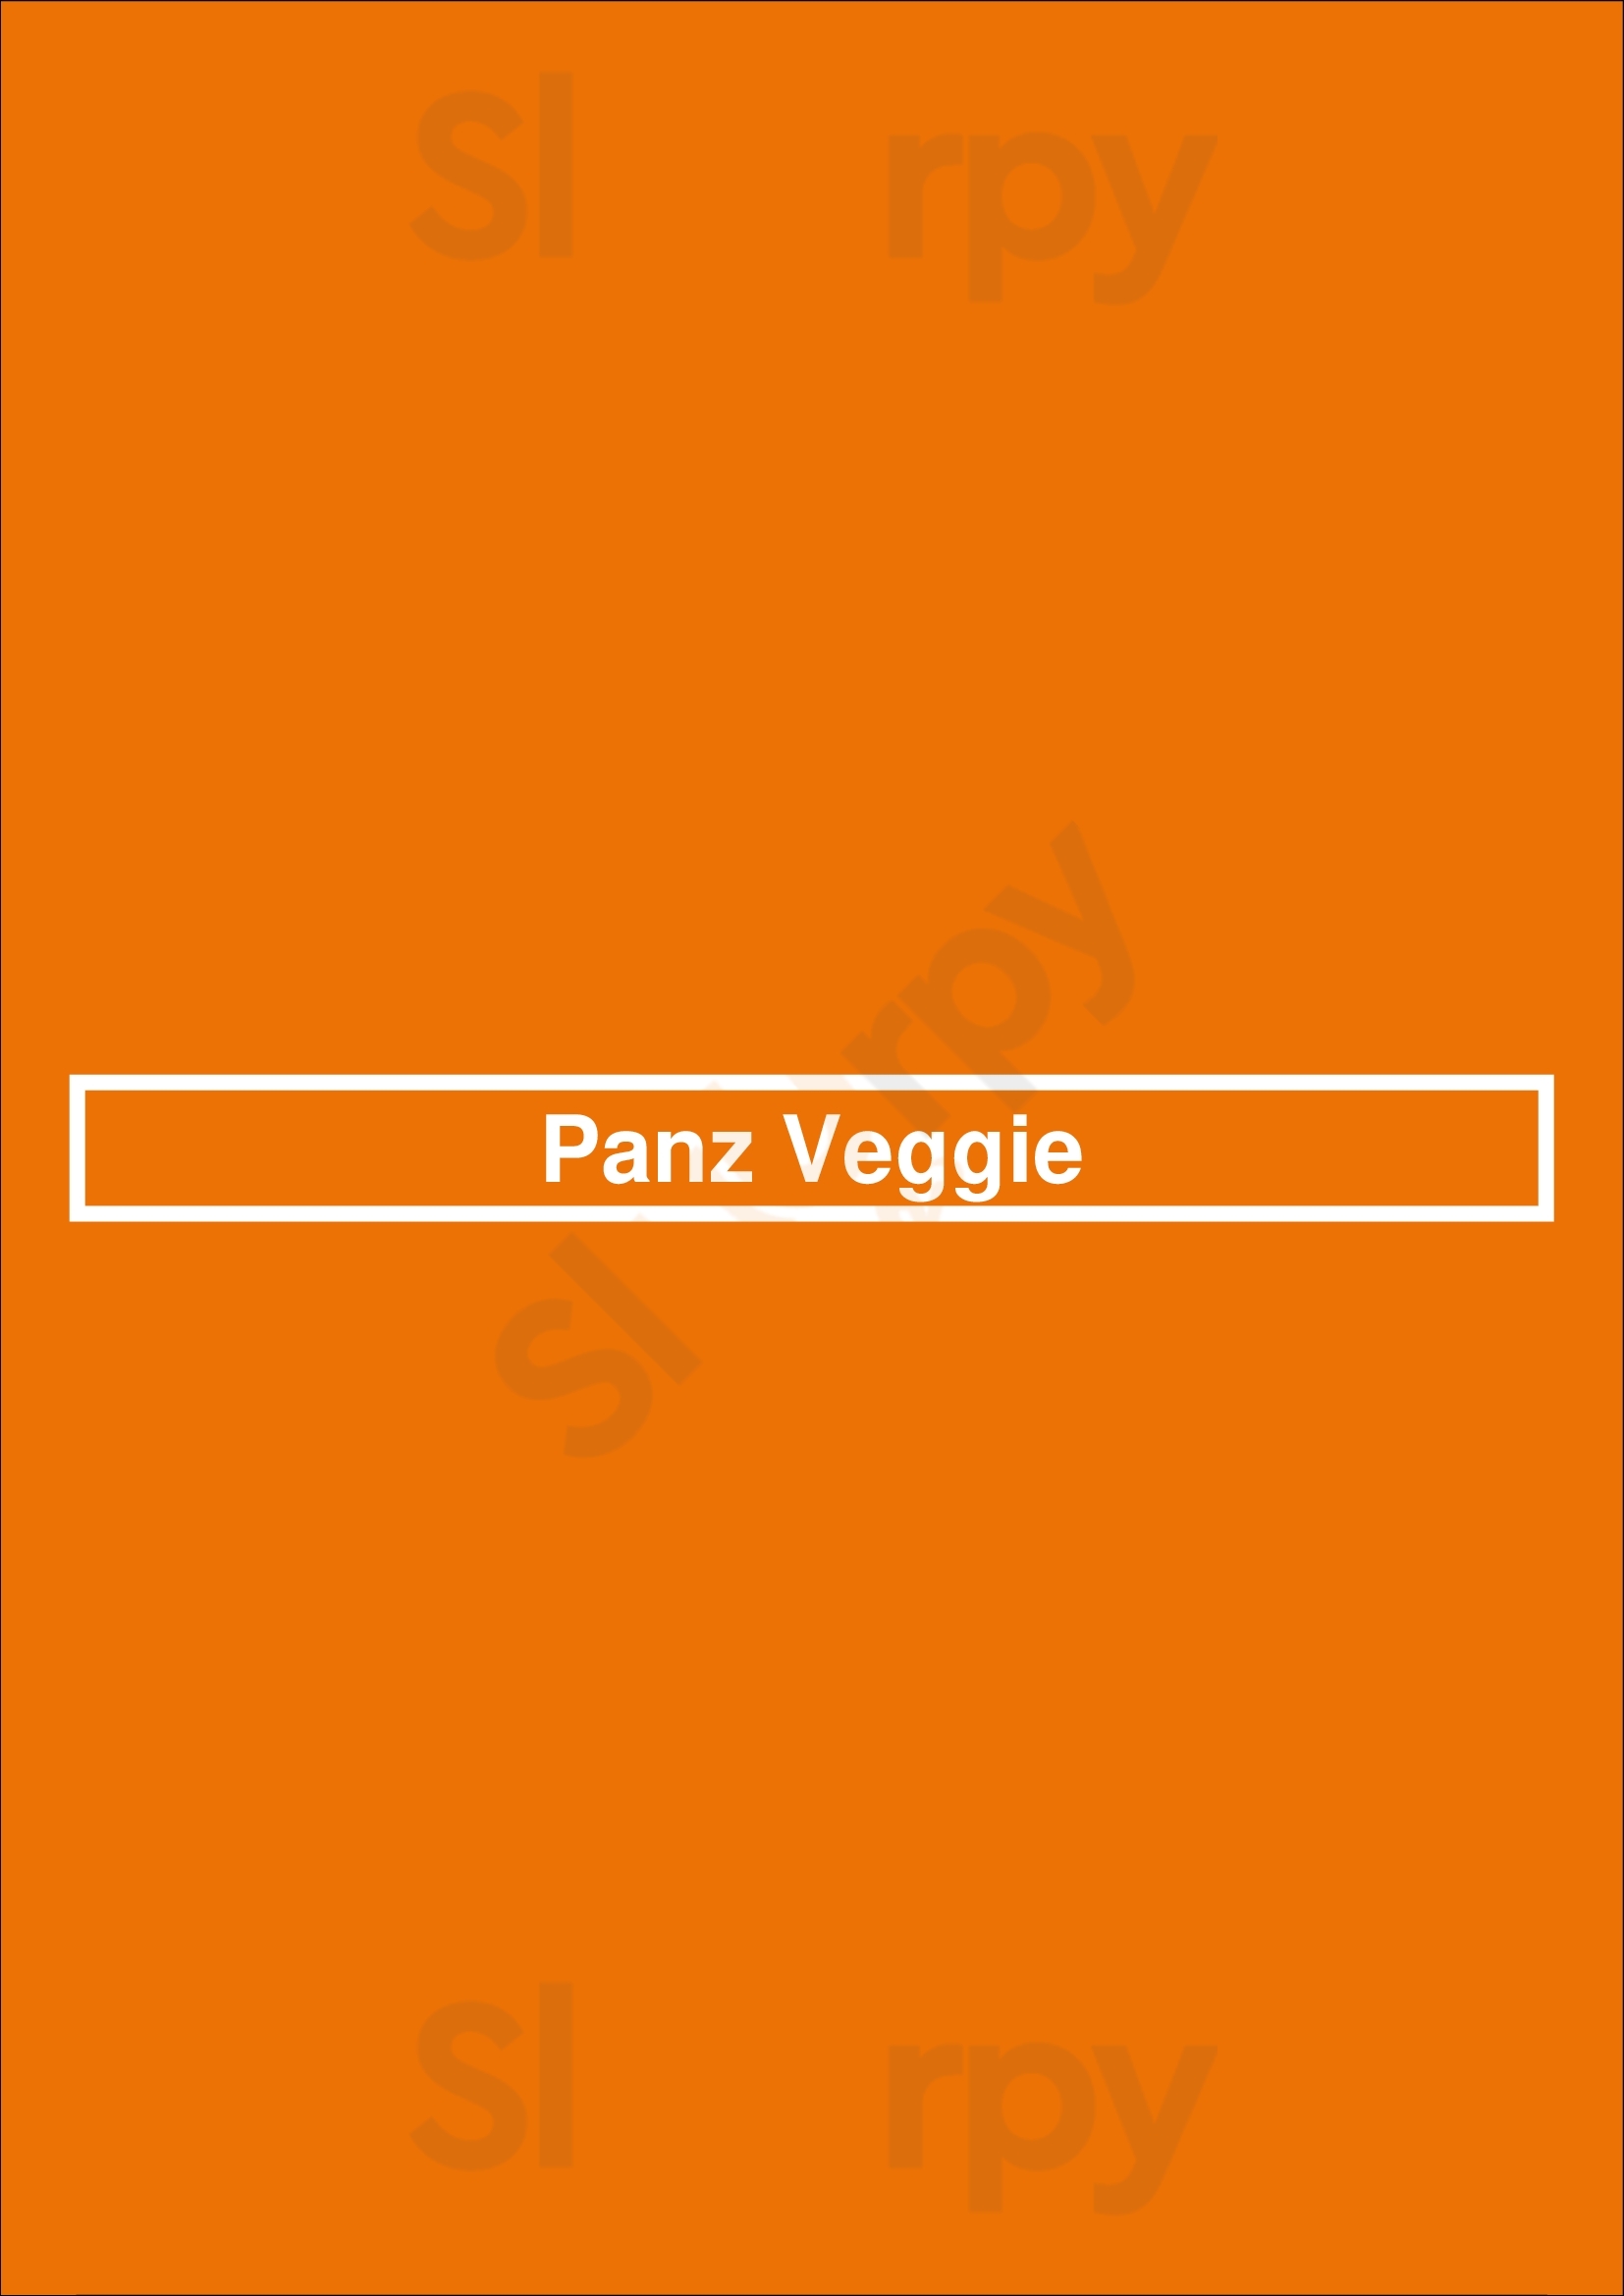 Panz Veggie Vancouver Menu - 1